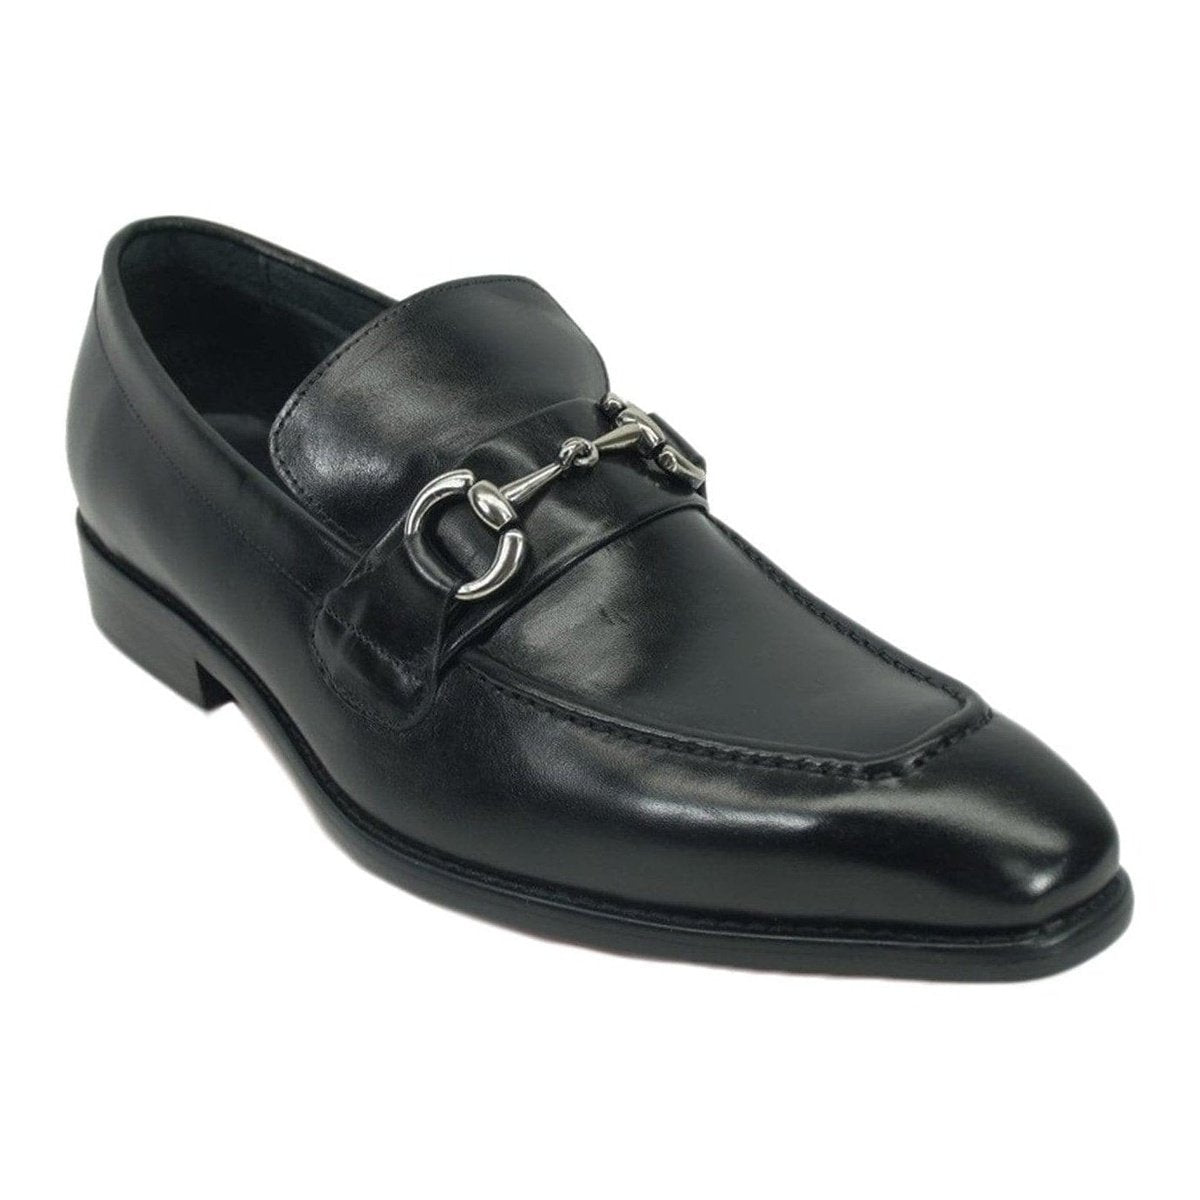 Carrucci Shoes For Amazon 7.5 D-M Carrucci Black Slip-on Loafer Apron Toe Leather Dress Shoes